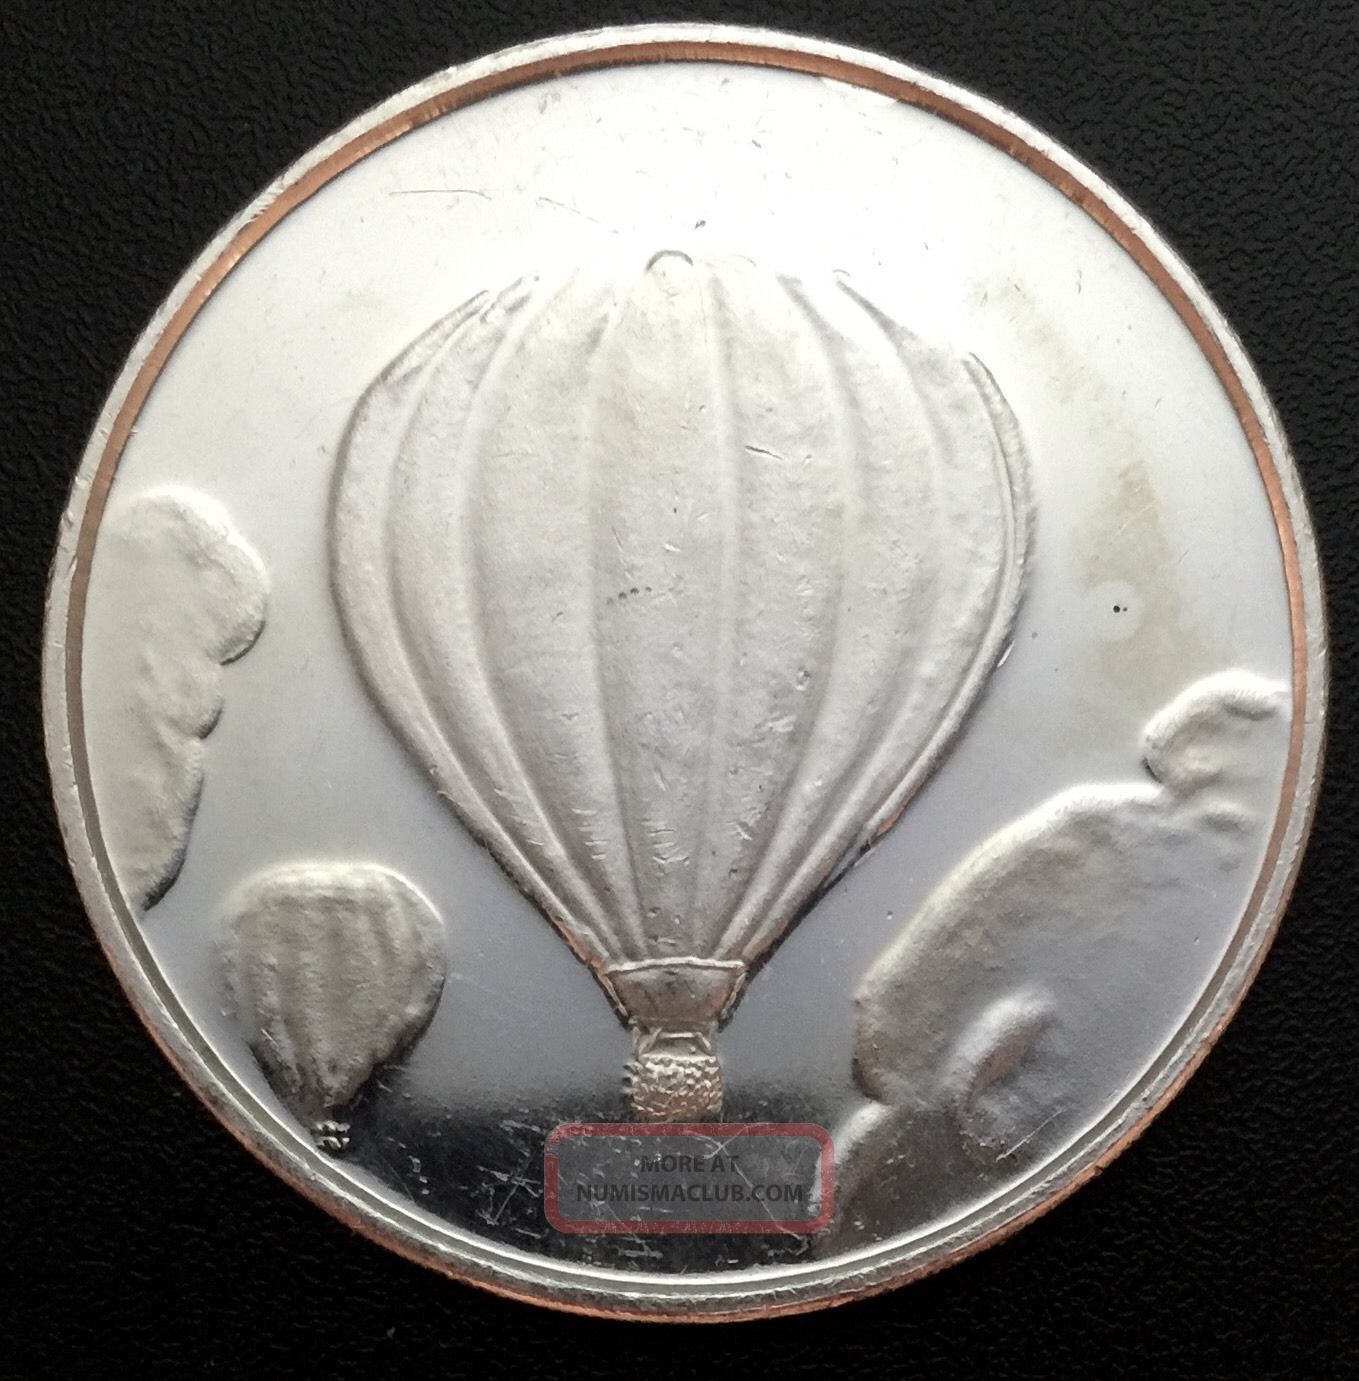 Hot Air Balloon 1 Troy Oz.  999 Fine Silver Coin (rdig1) Silver photo